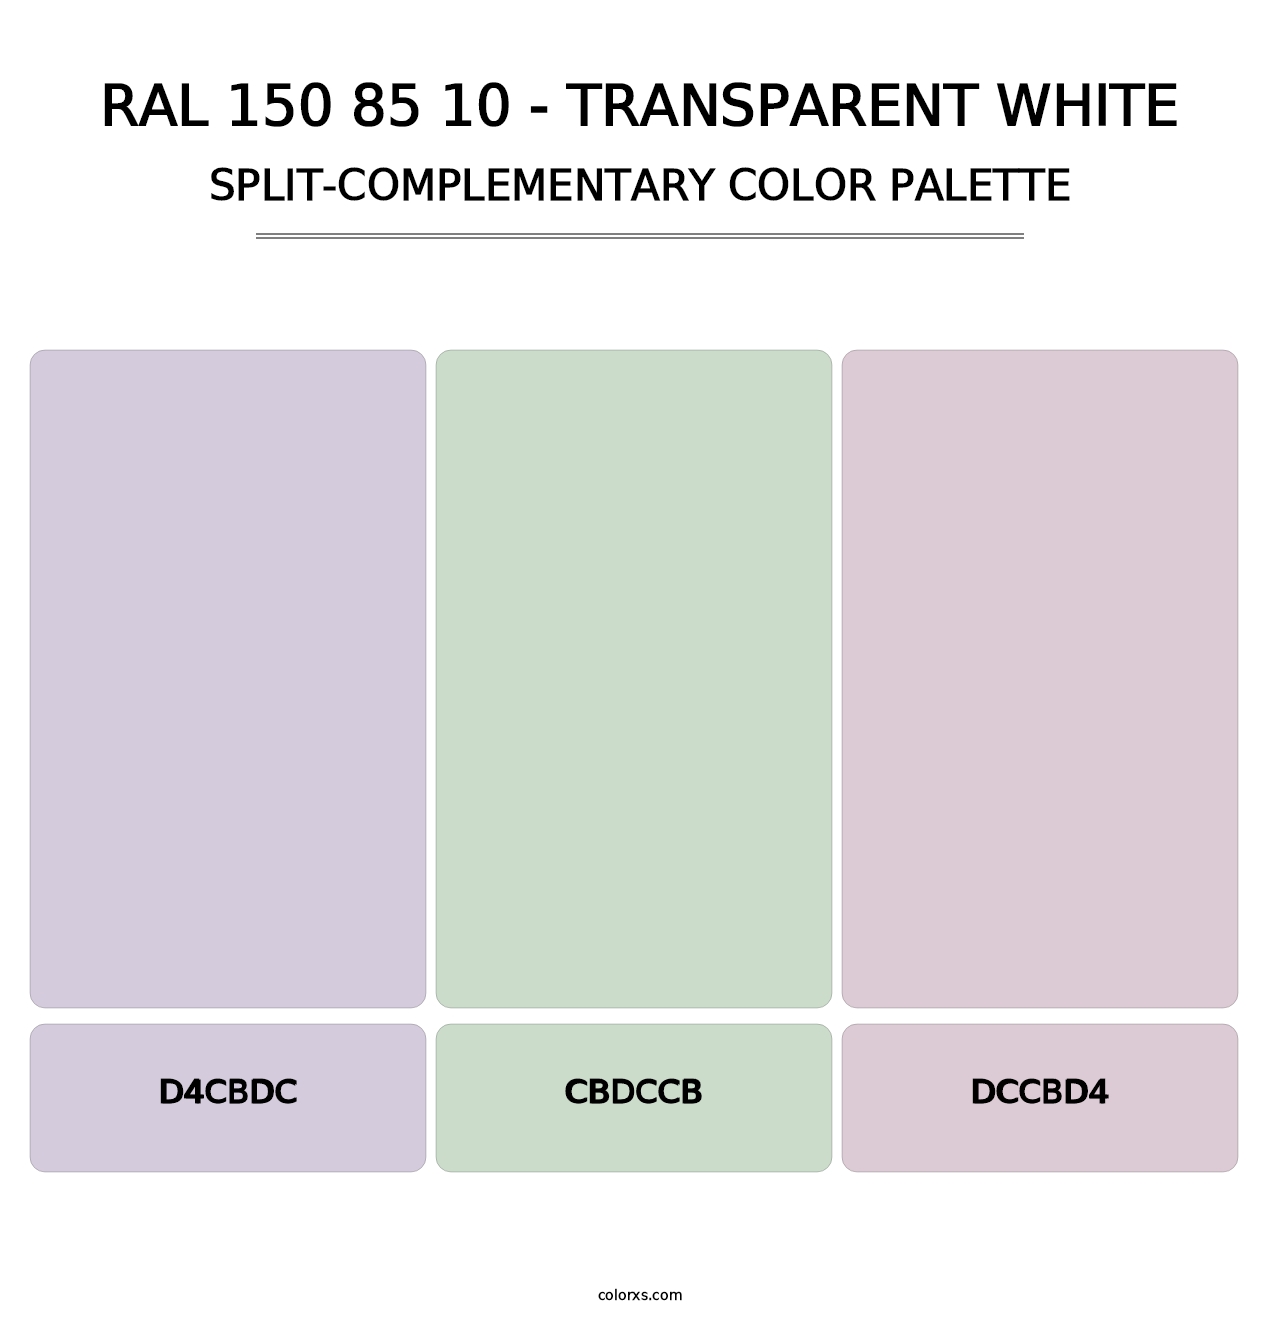 RAL 150 85 10 - Transparent White - Split-Complementary Color Palette